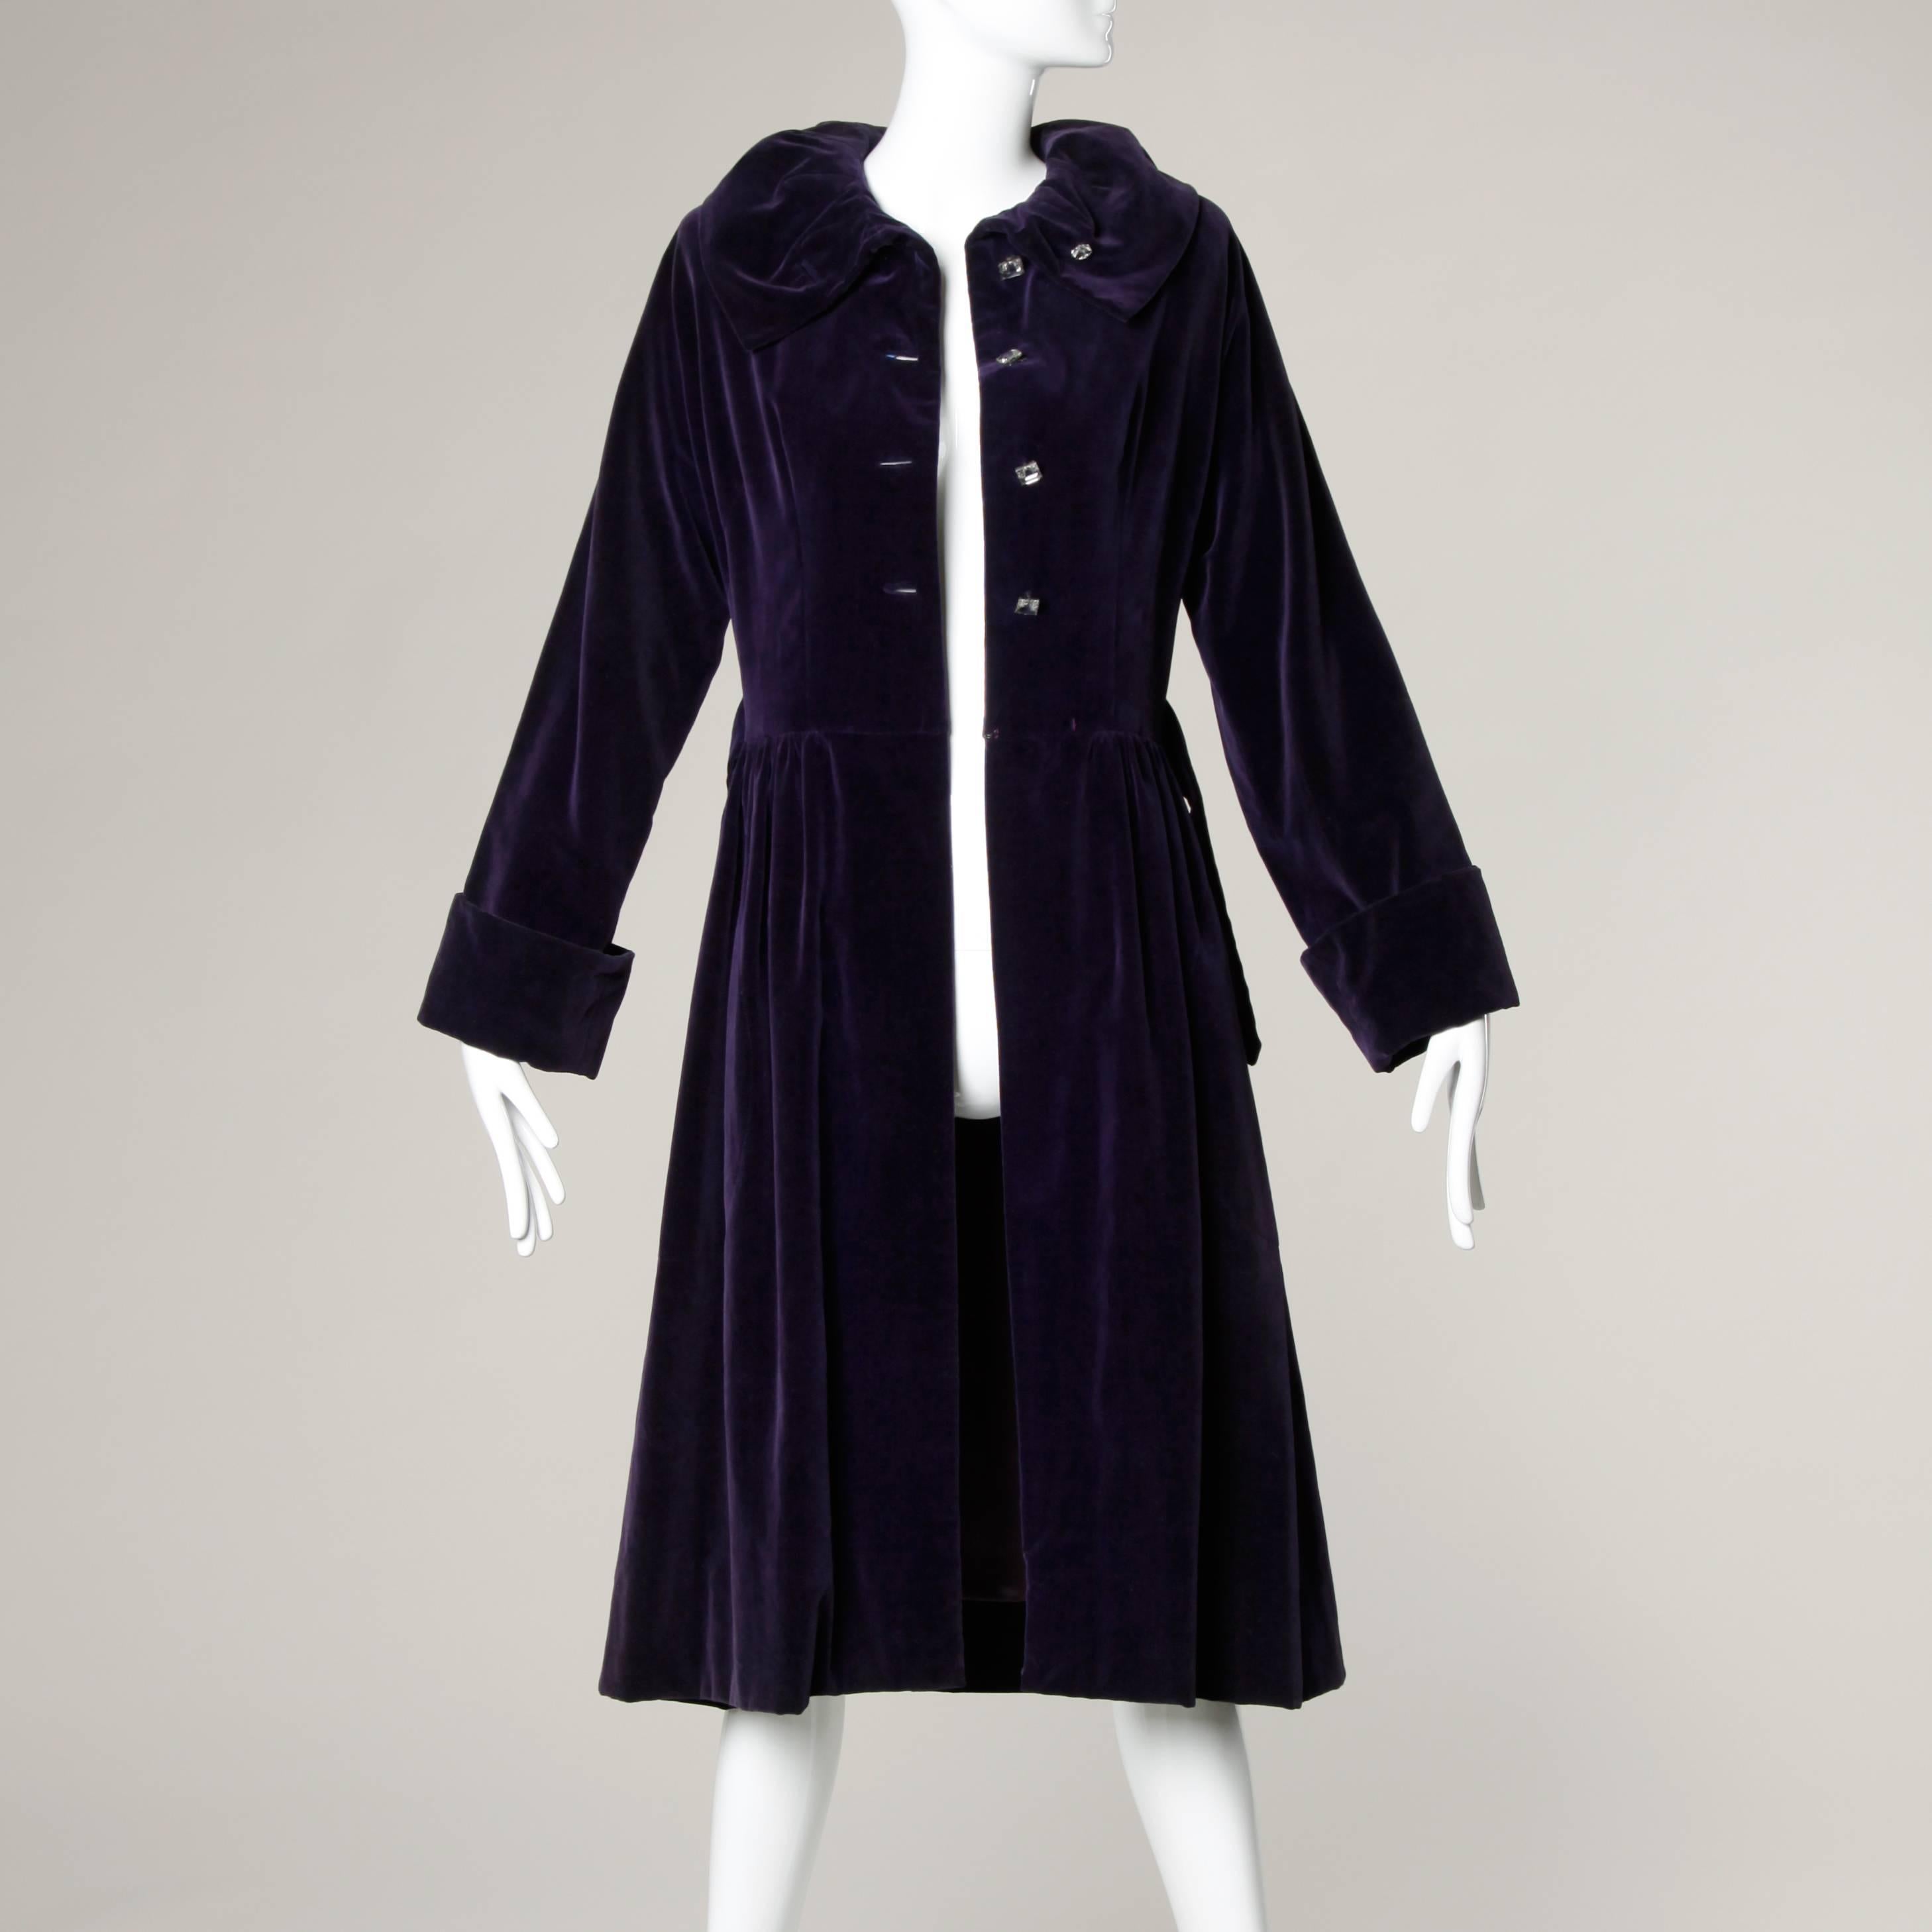 Black Gorgeous 1940s Vintage Purple Velvet Coat with Glass Buttons + Matching Belt